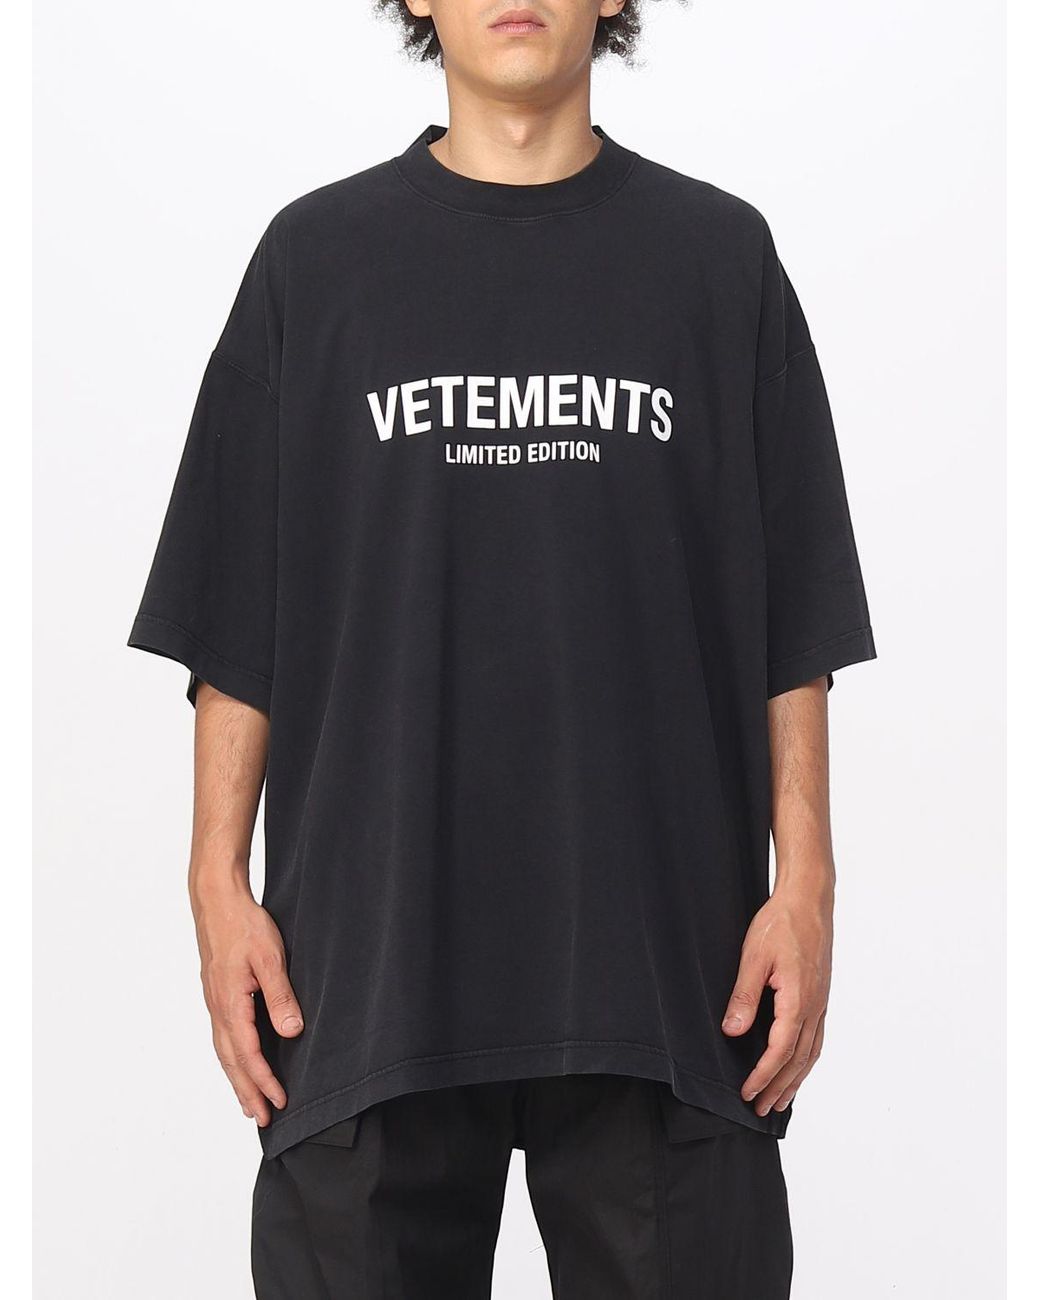 Vetements T-shirt in Black for Men | Lyst